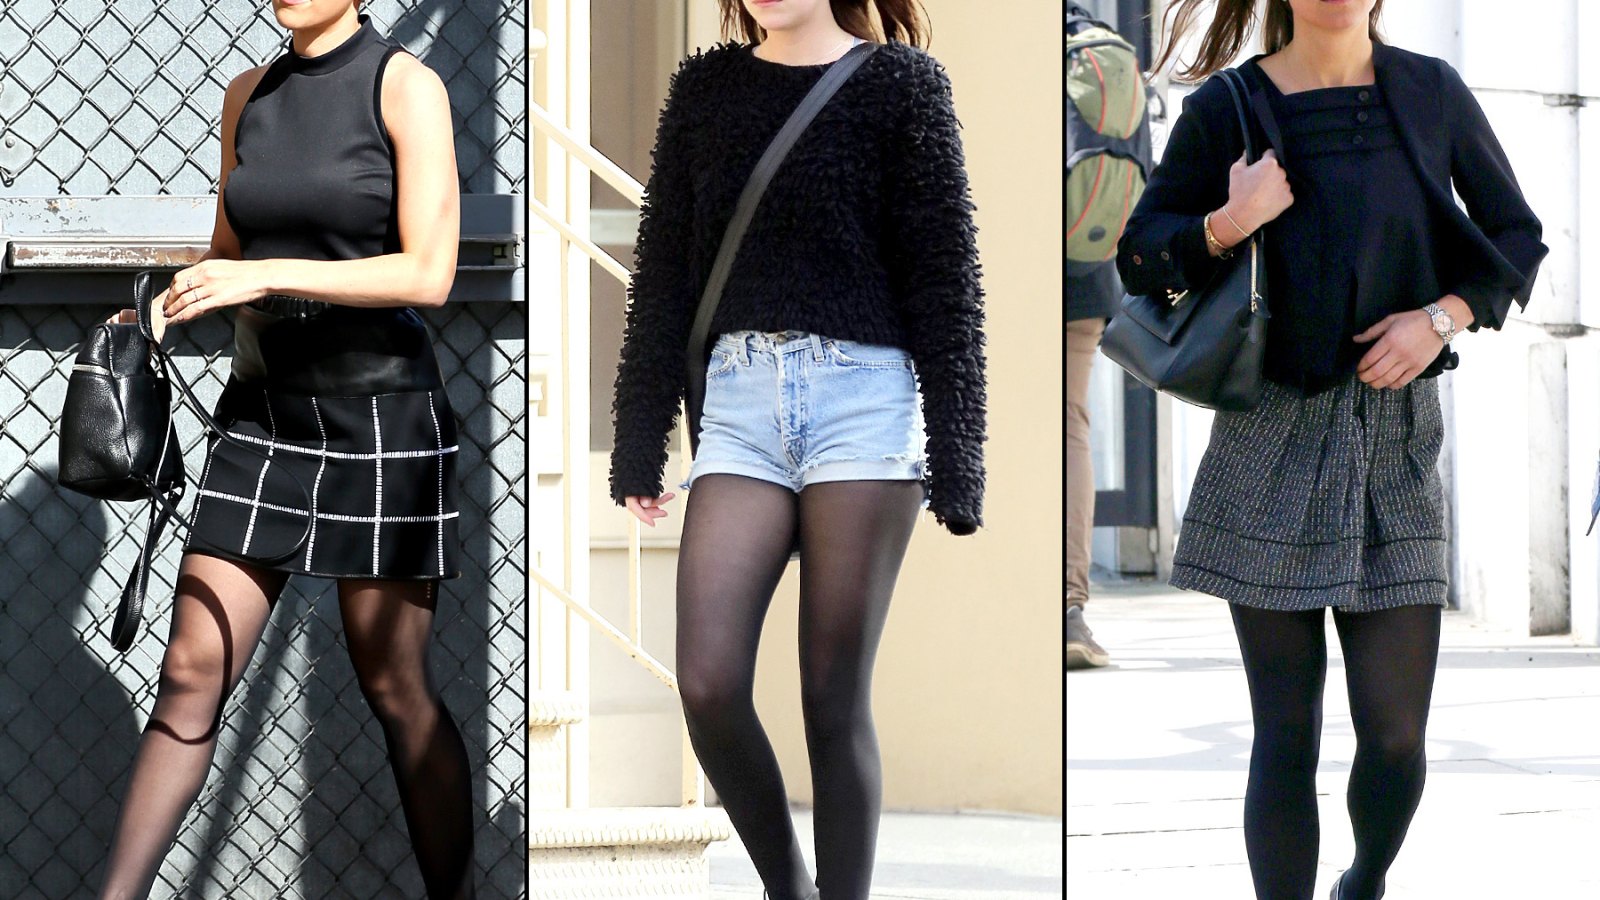 Scarlett Johansson, Dakota Johnsson, Pippa Middleton wear black tights